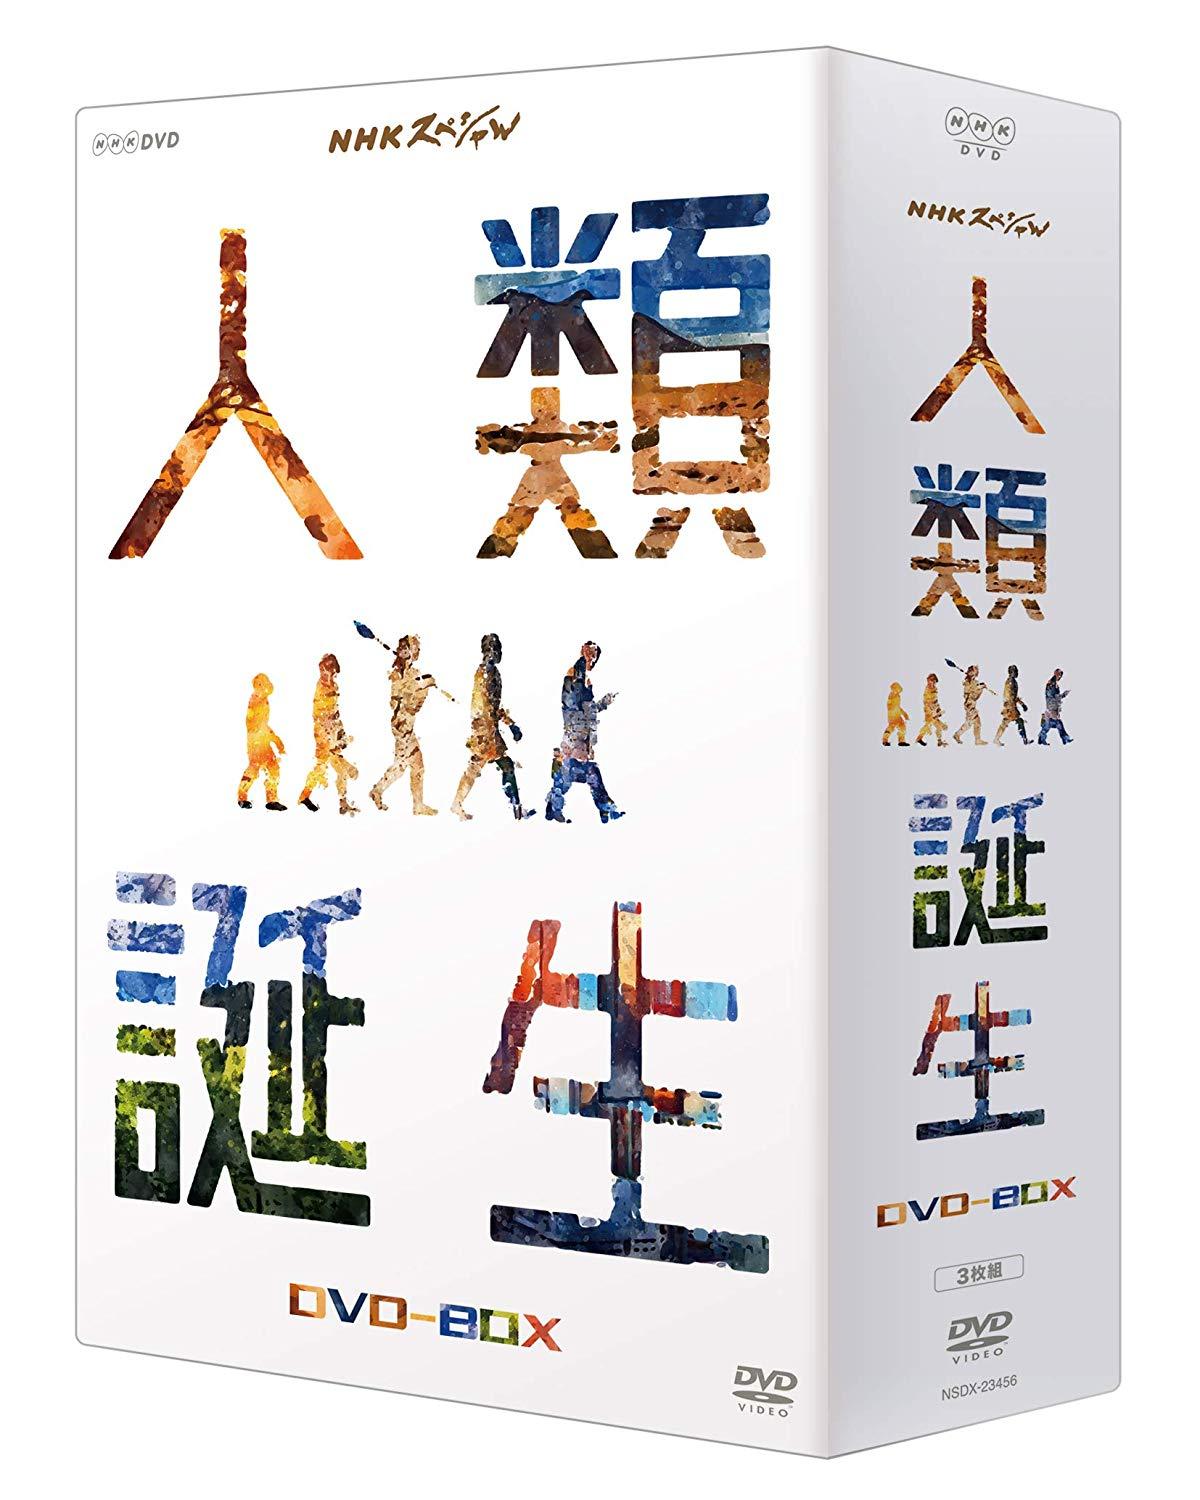 NHKXyV lޒa DVD-BOX hLg